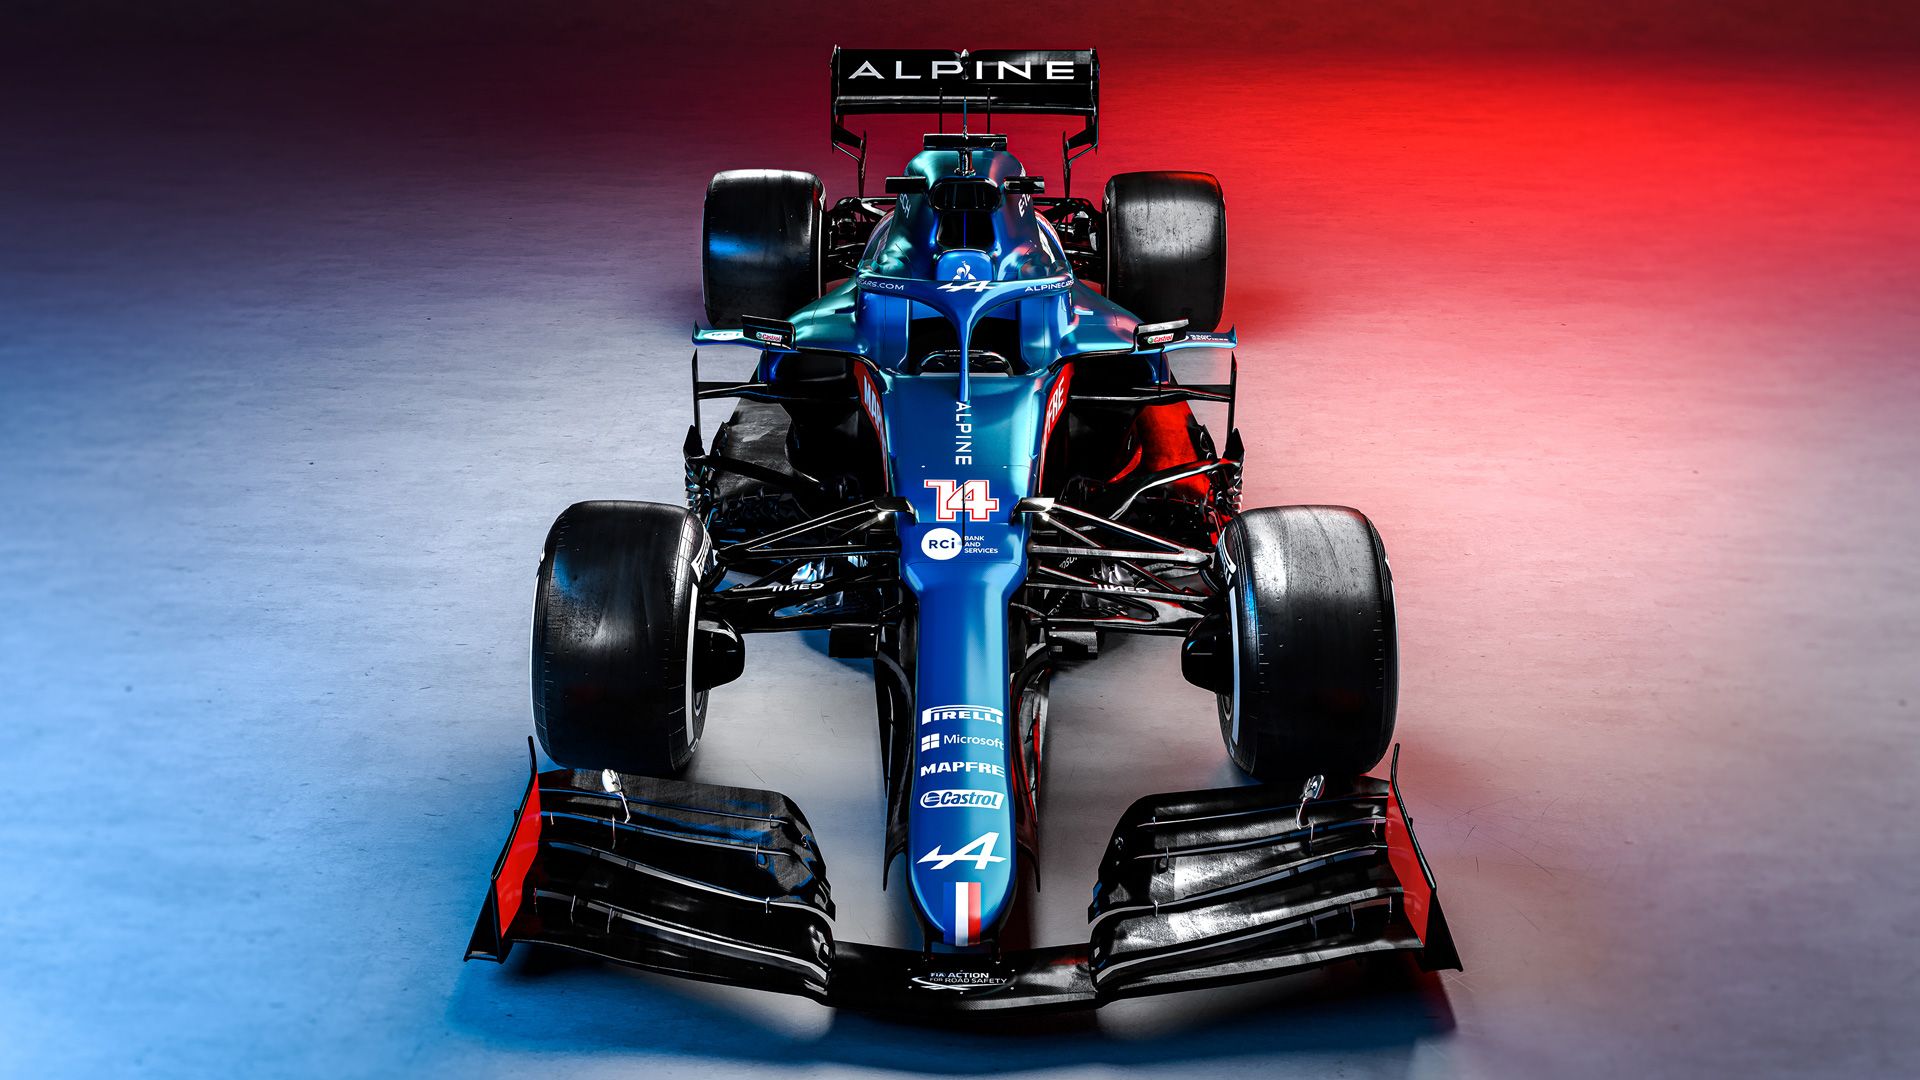 Alpine F1 Teams Background 5